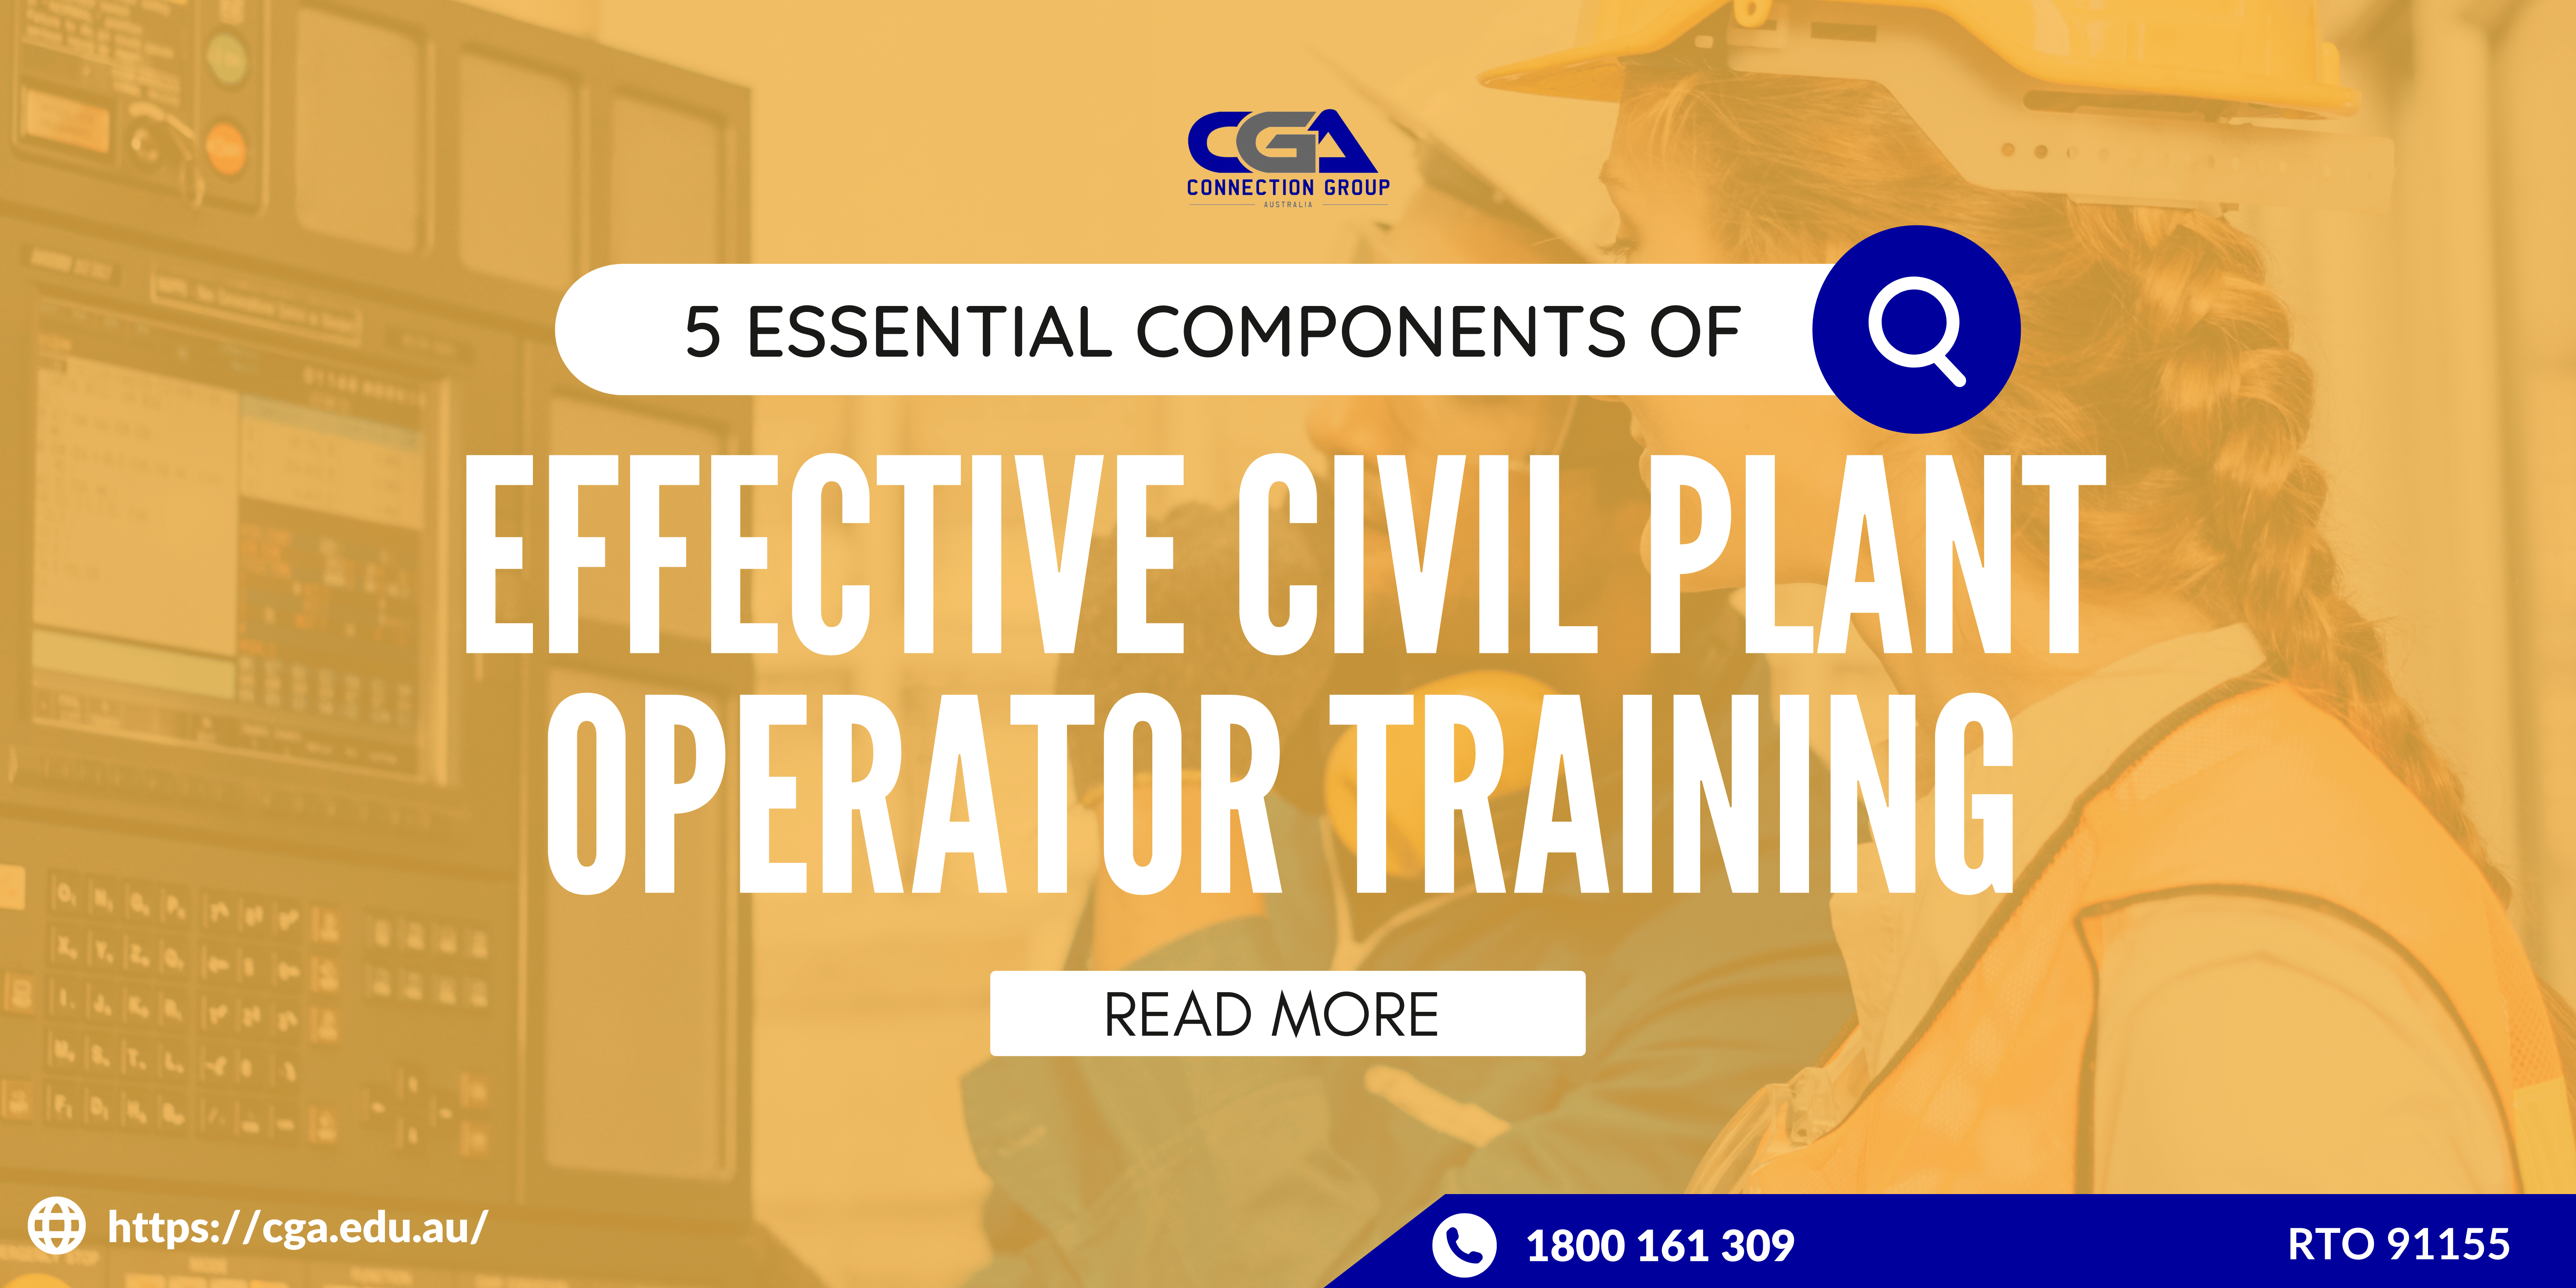 Civil Plant Operator Training